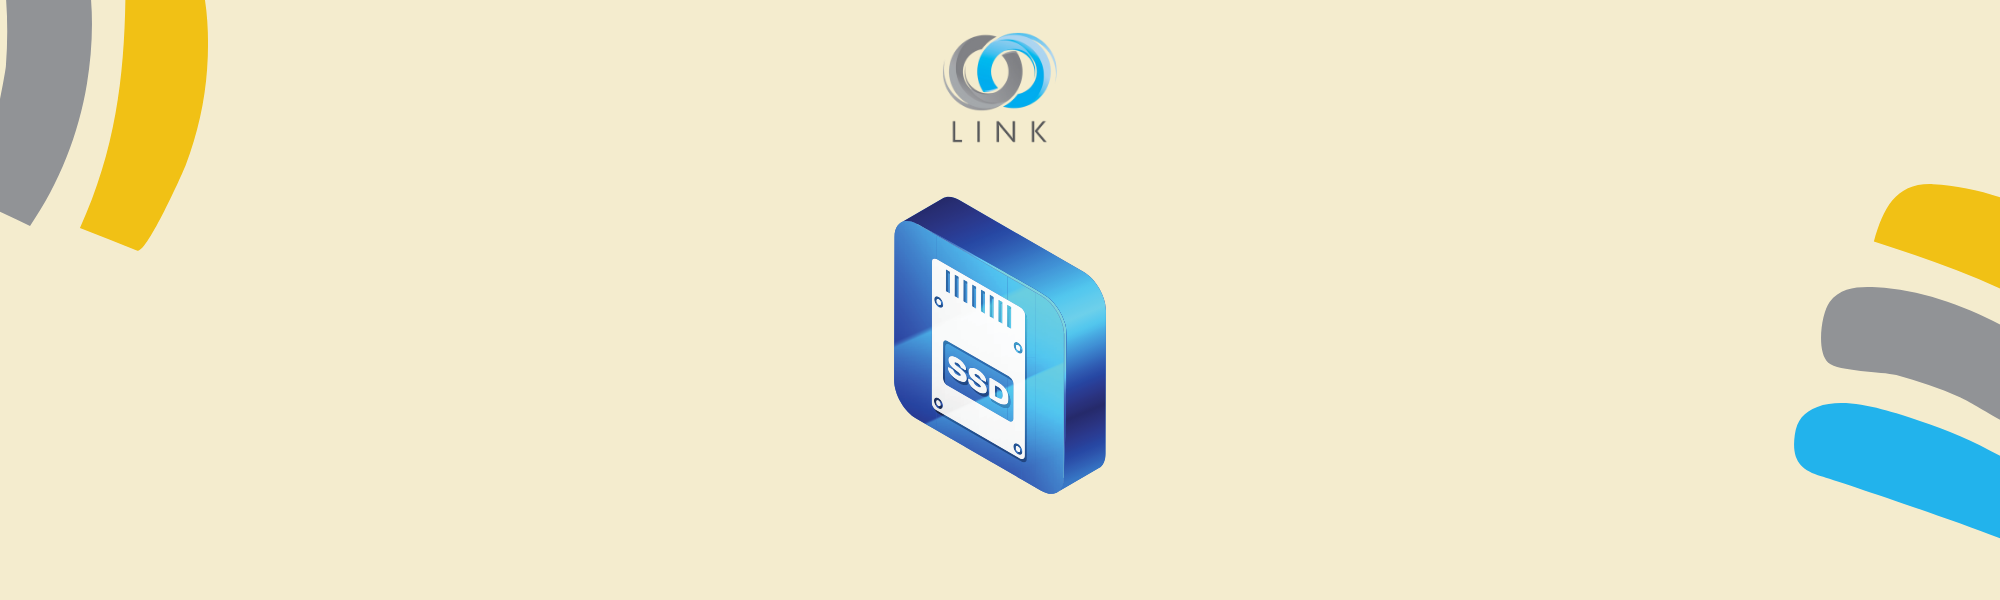 Linkdata.com Introduces advanced Block Storage Iraq Solutions.